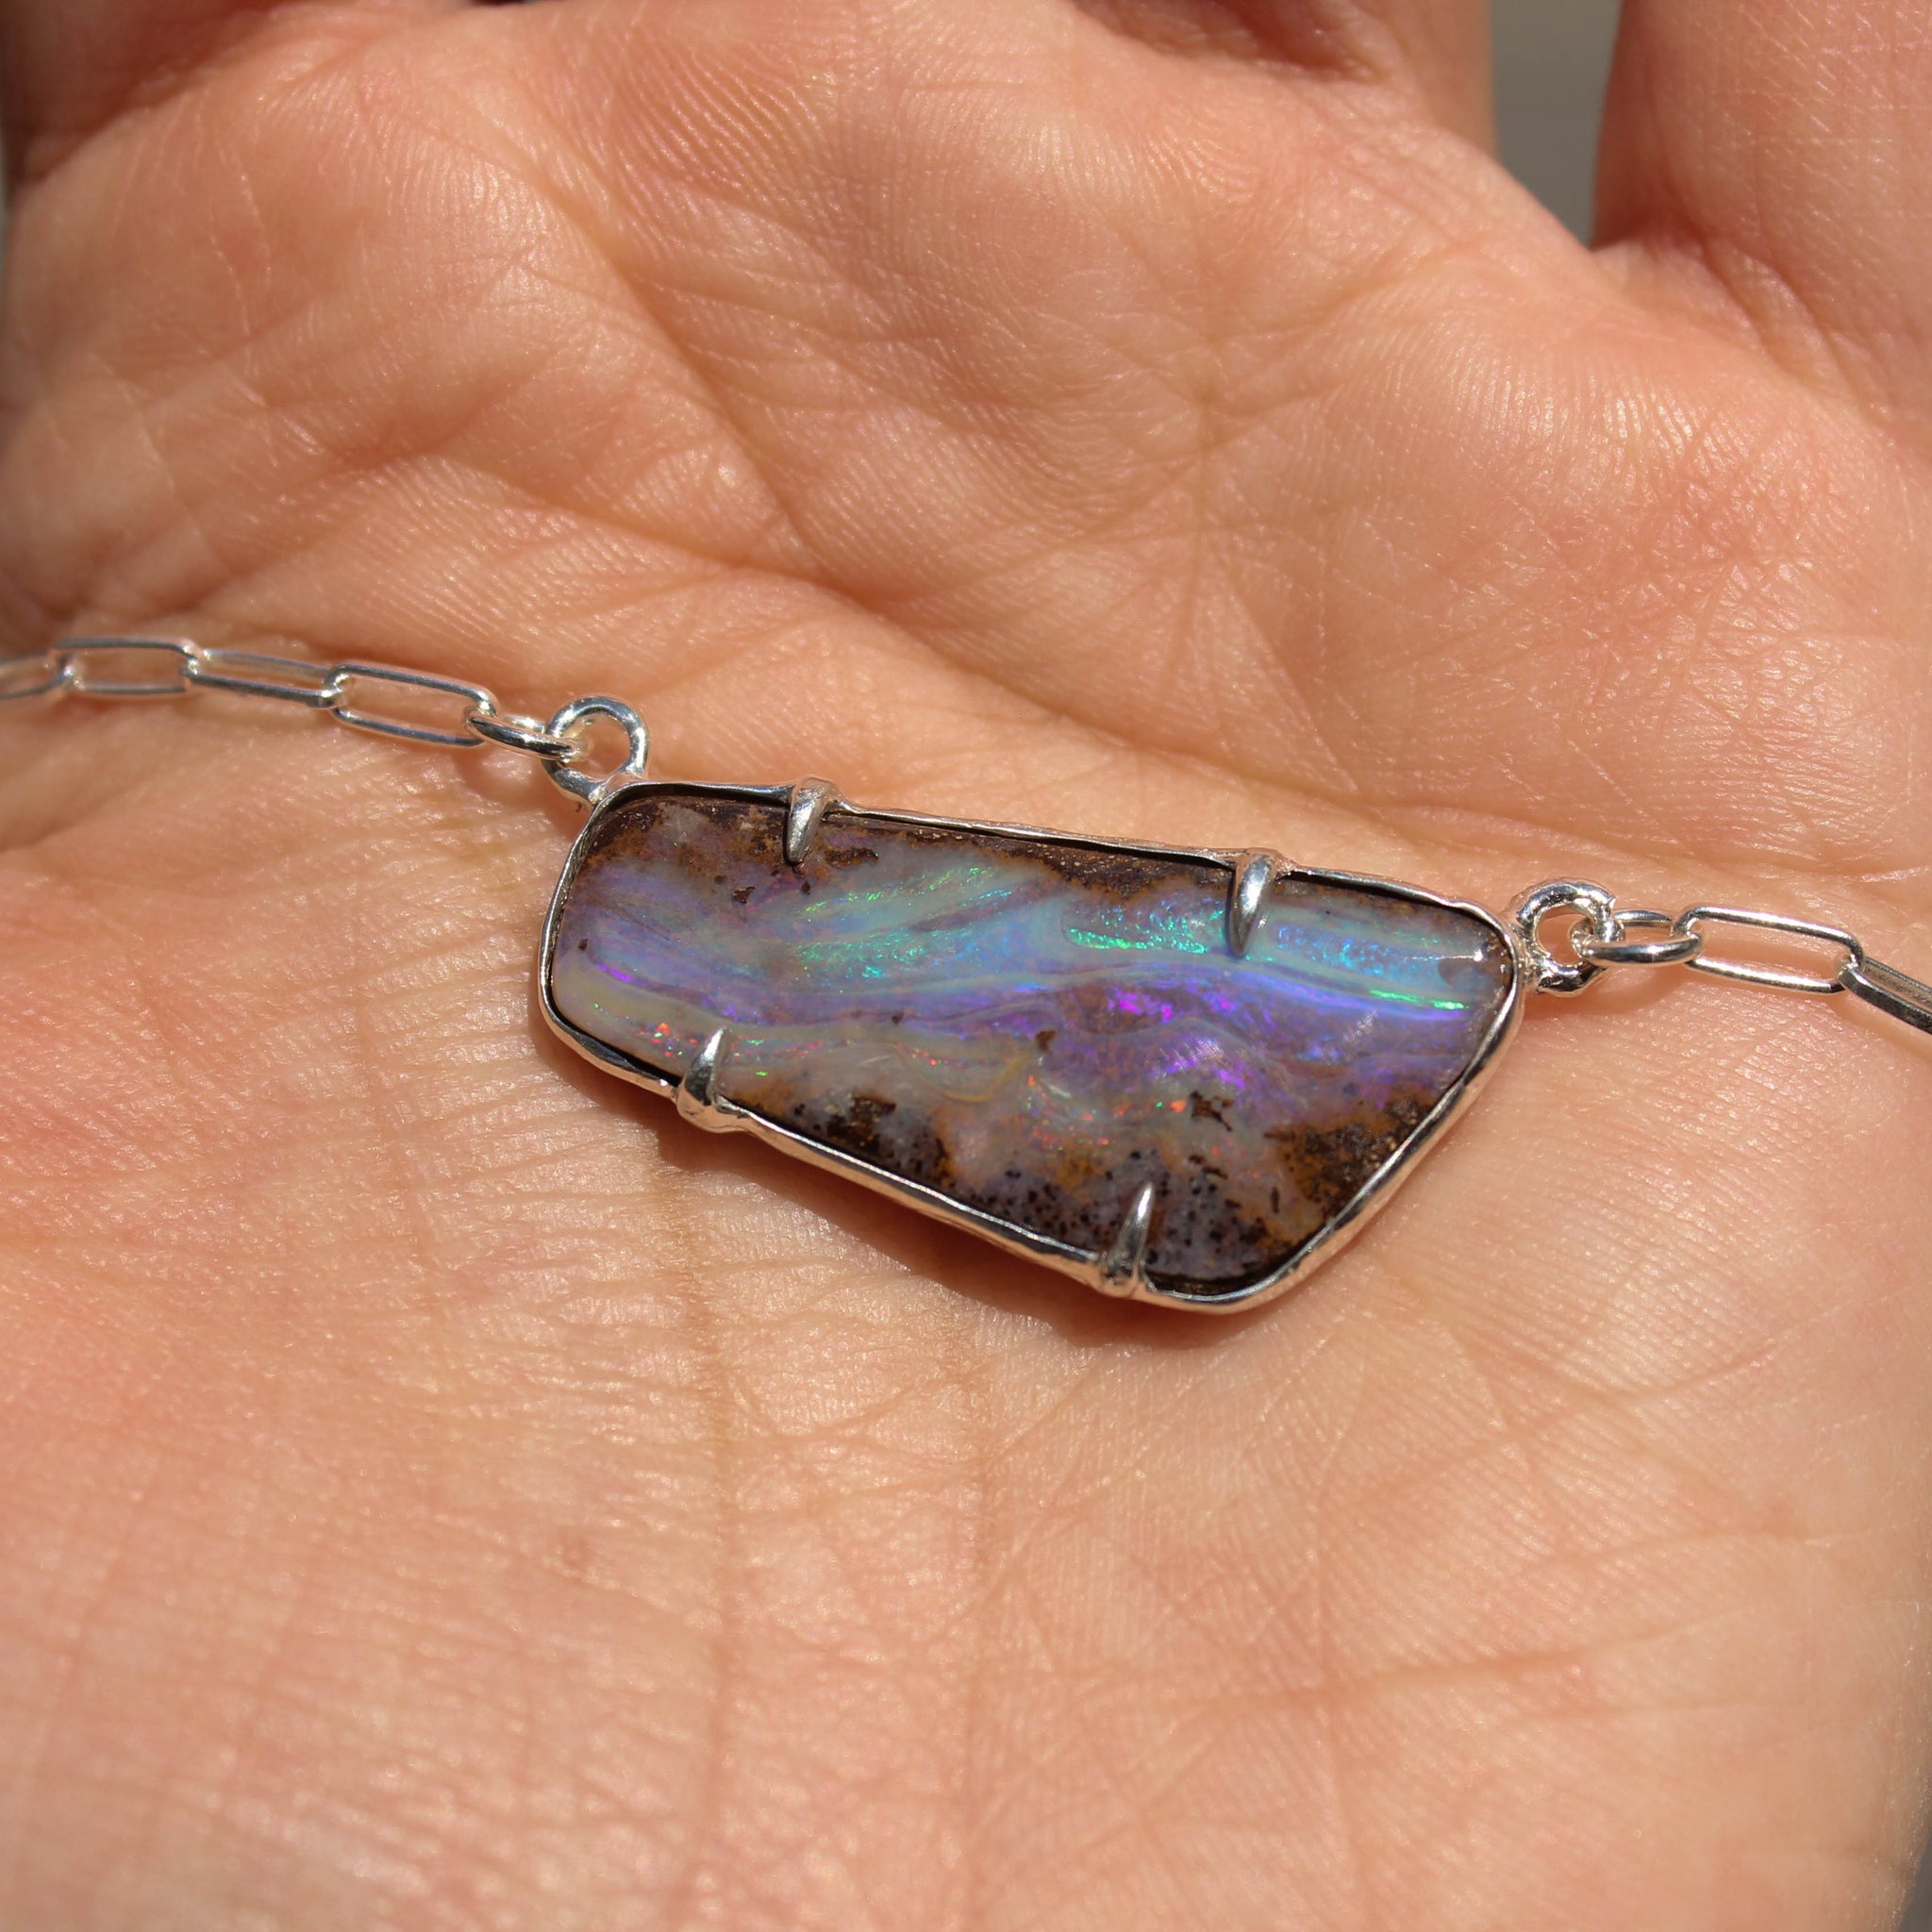 Statement Boulder Opal Pendant - Thaleia Jewelry